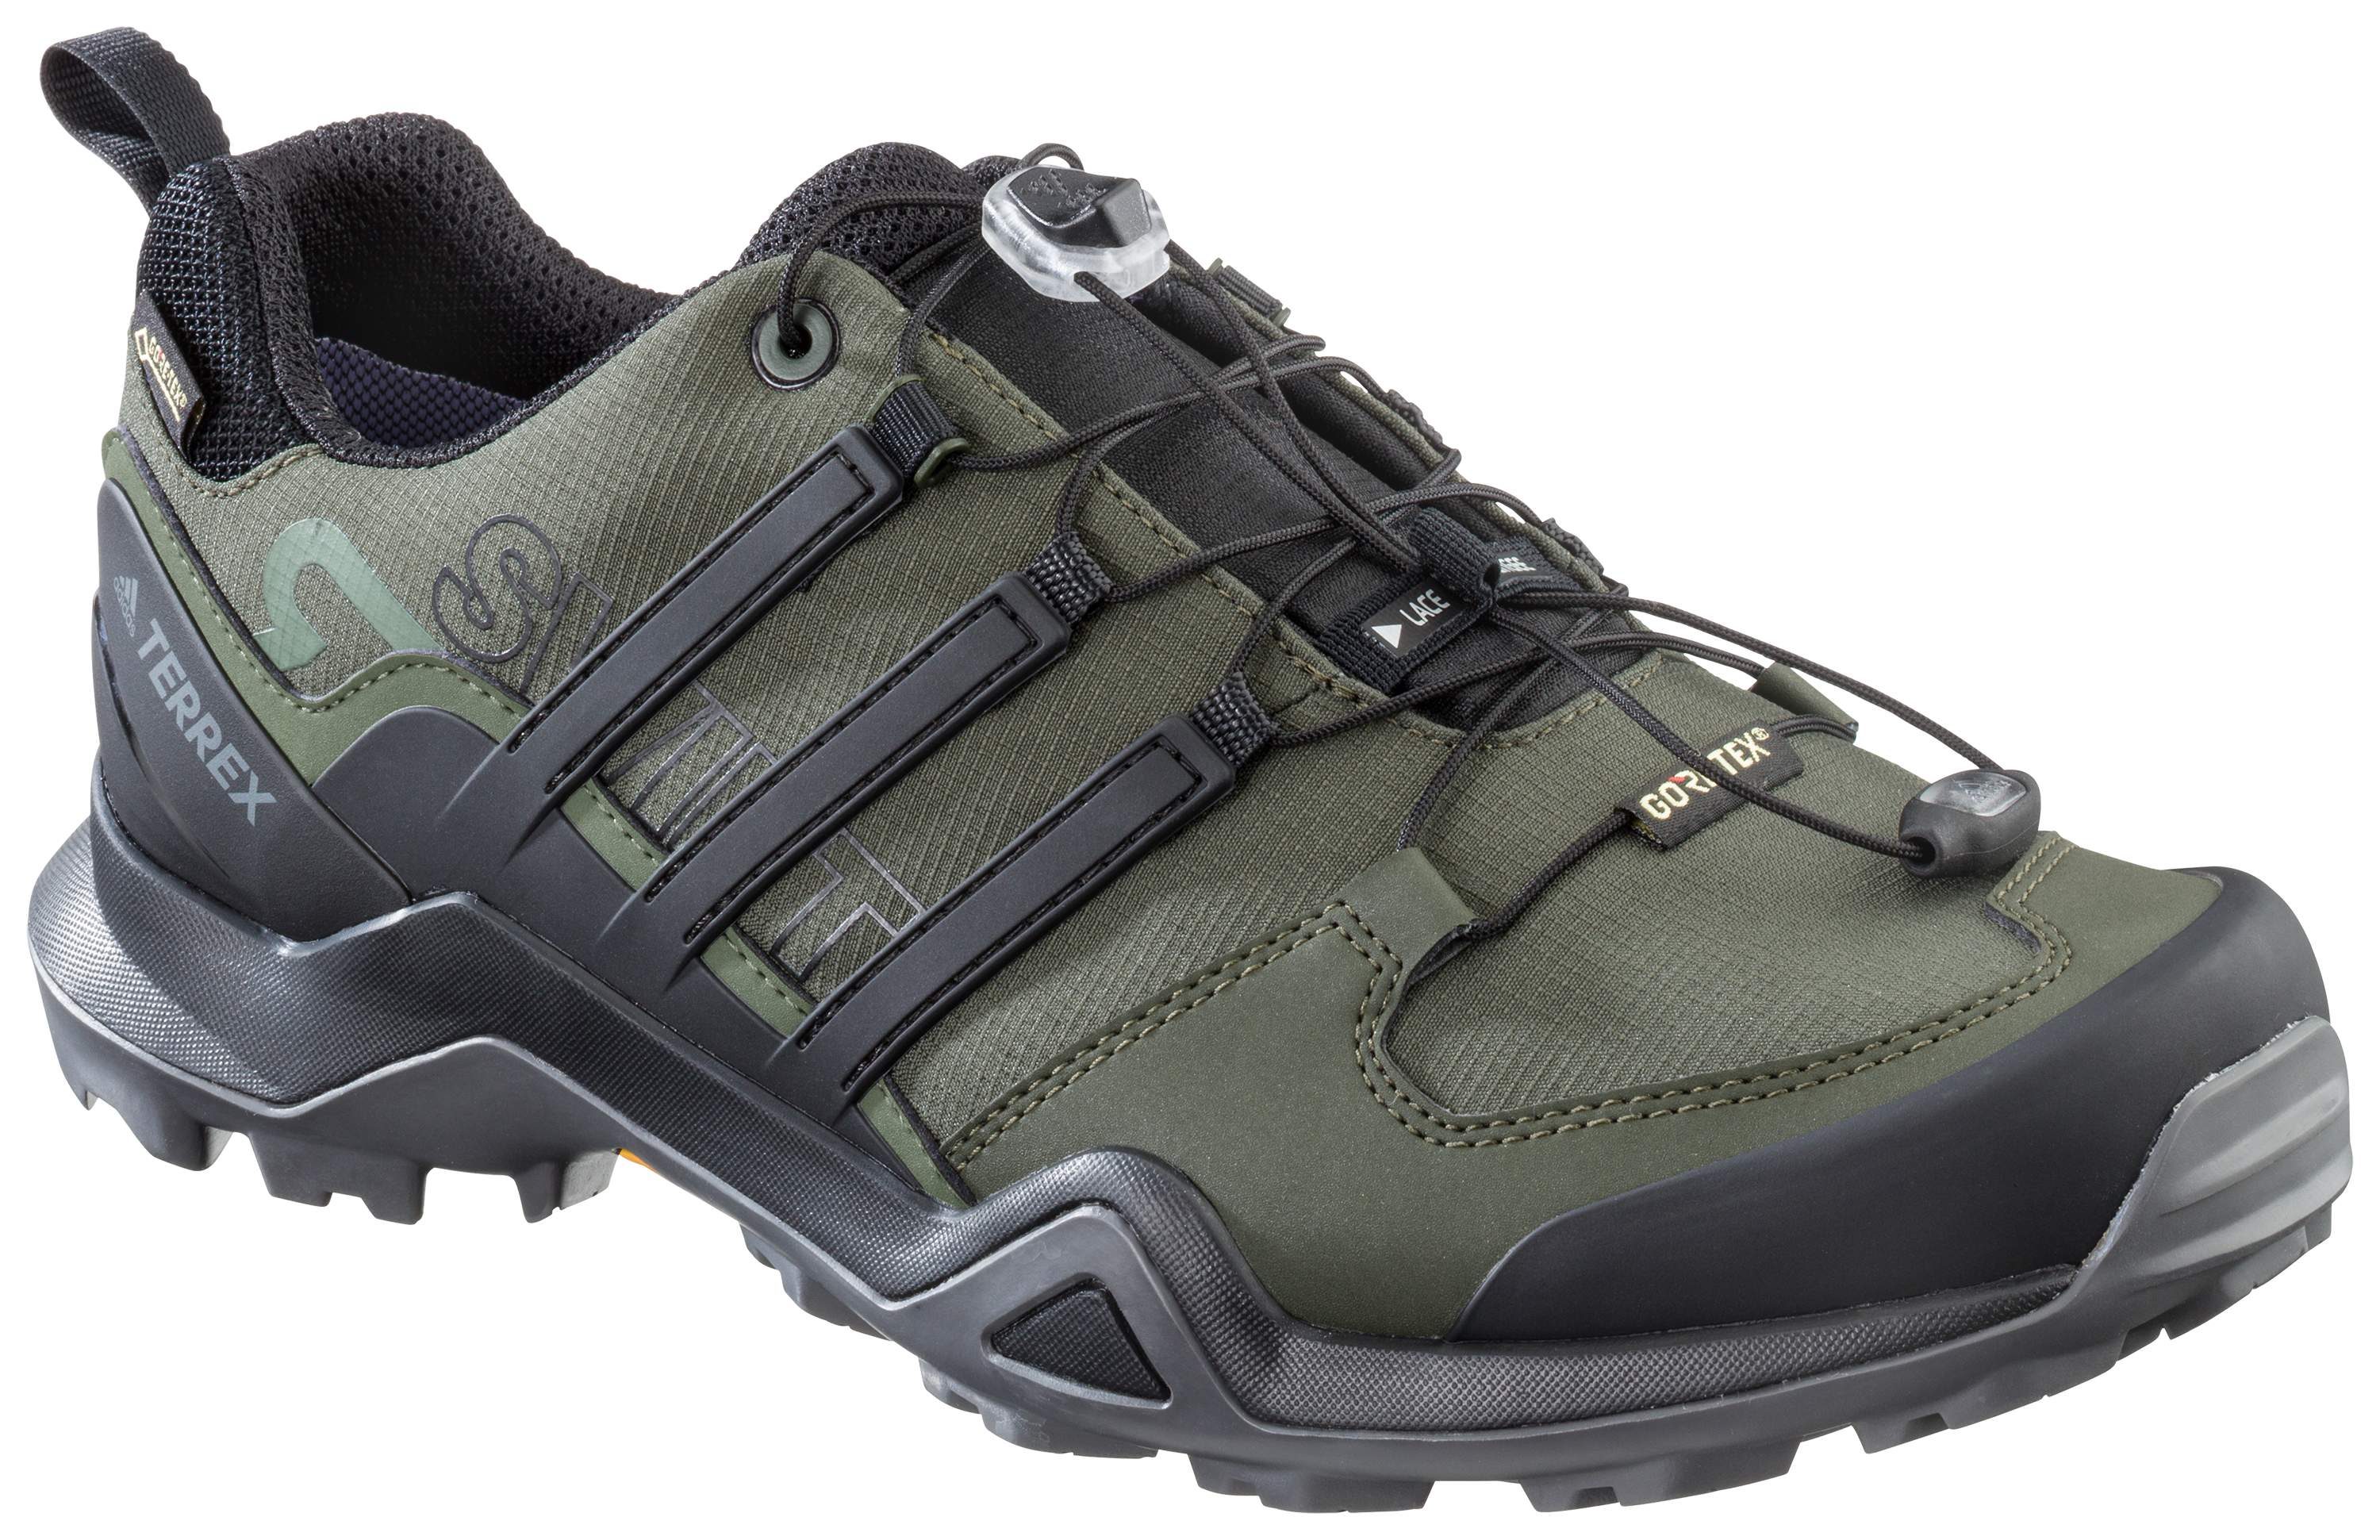 adidas Outdoor Terrex Swift R2 GTX Hiking Shoes for Men - Night/Black/Green - 8.5M